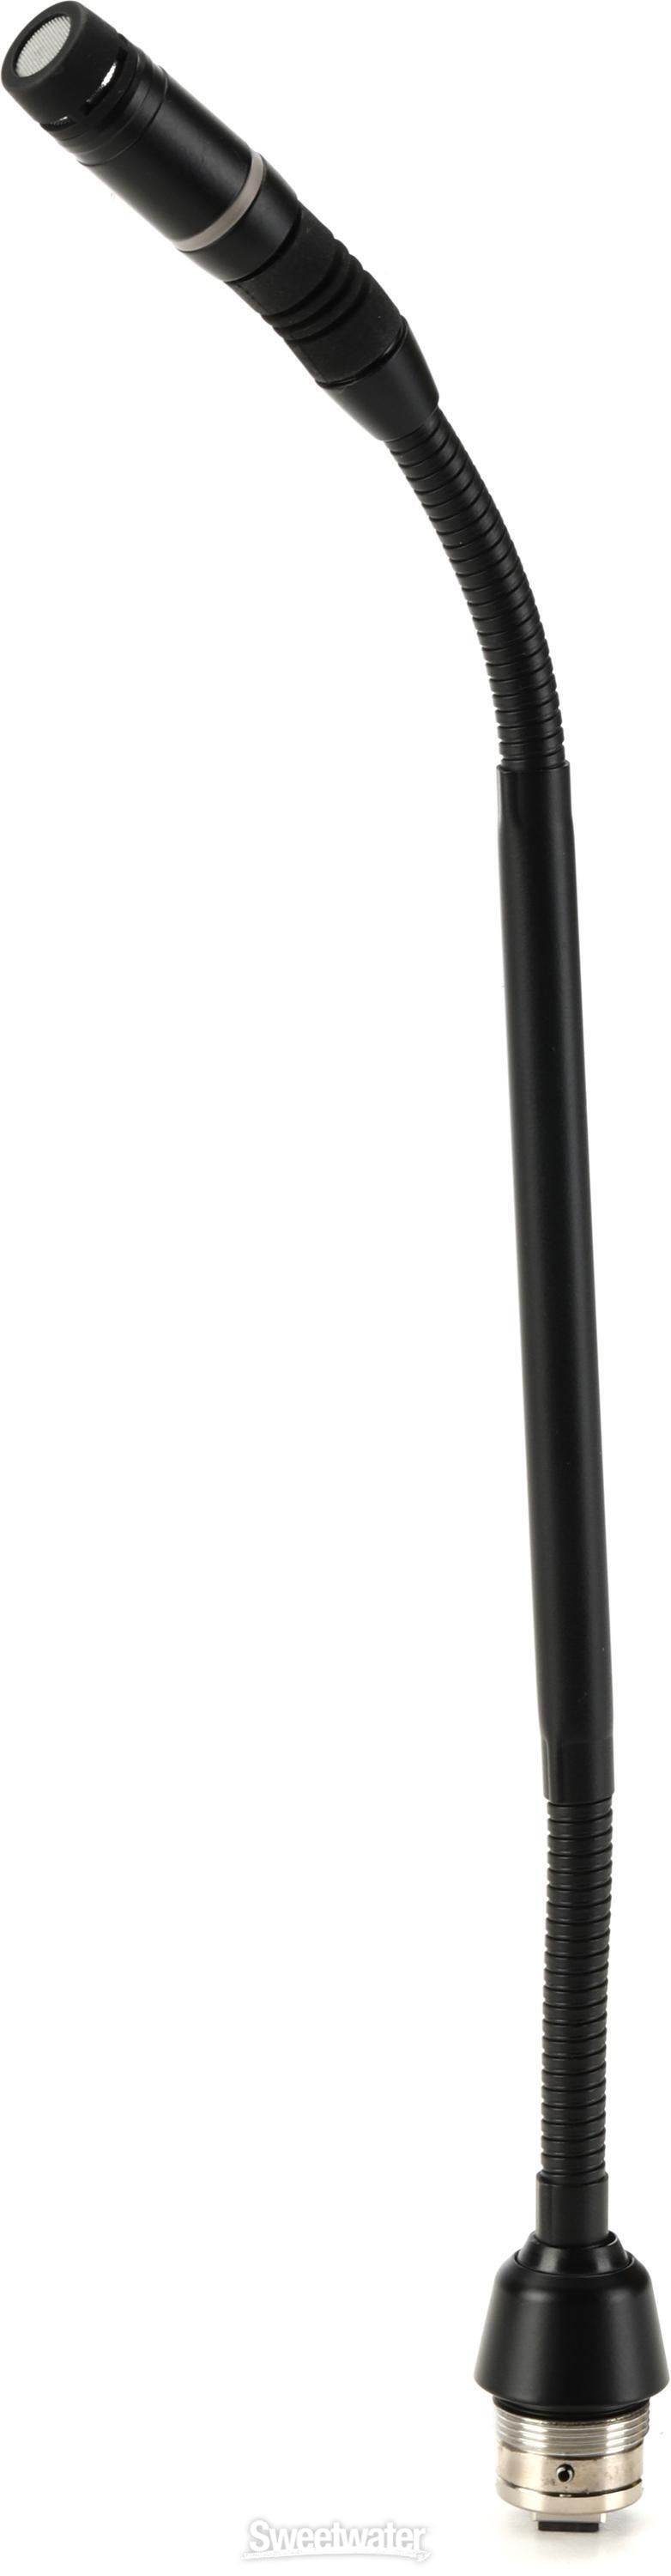 Shure MX410RLPDF/C 10 Cardioid Dualflex Gooseneck Microphone with